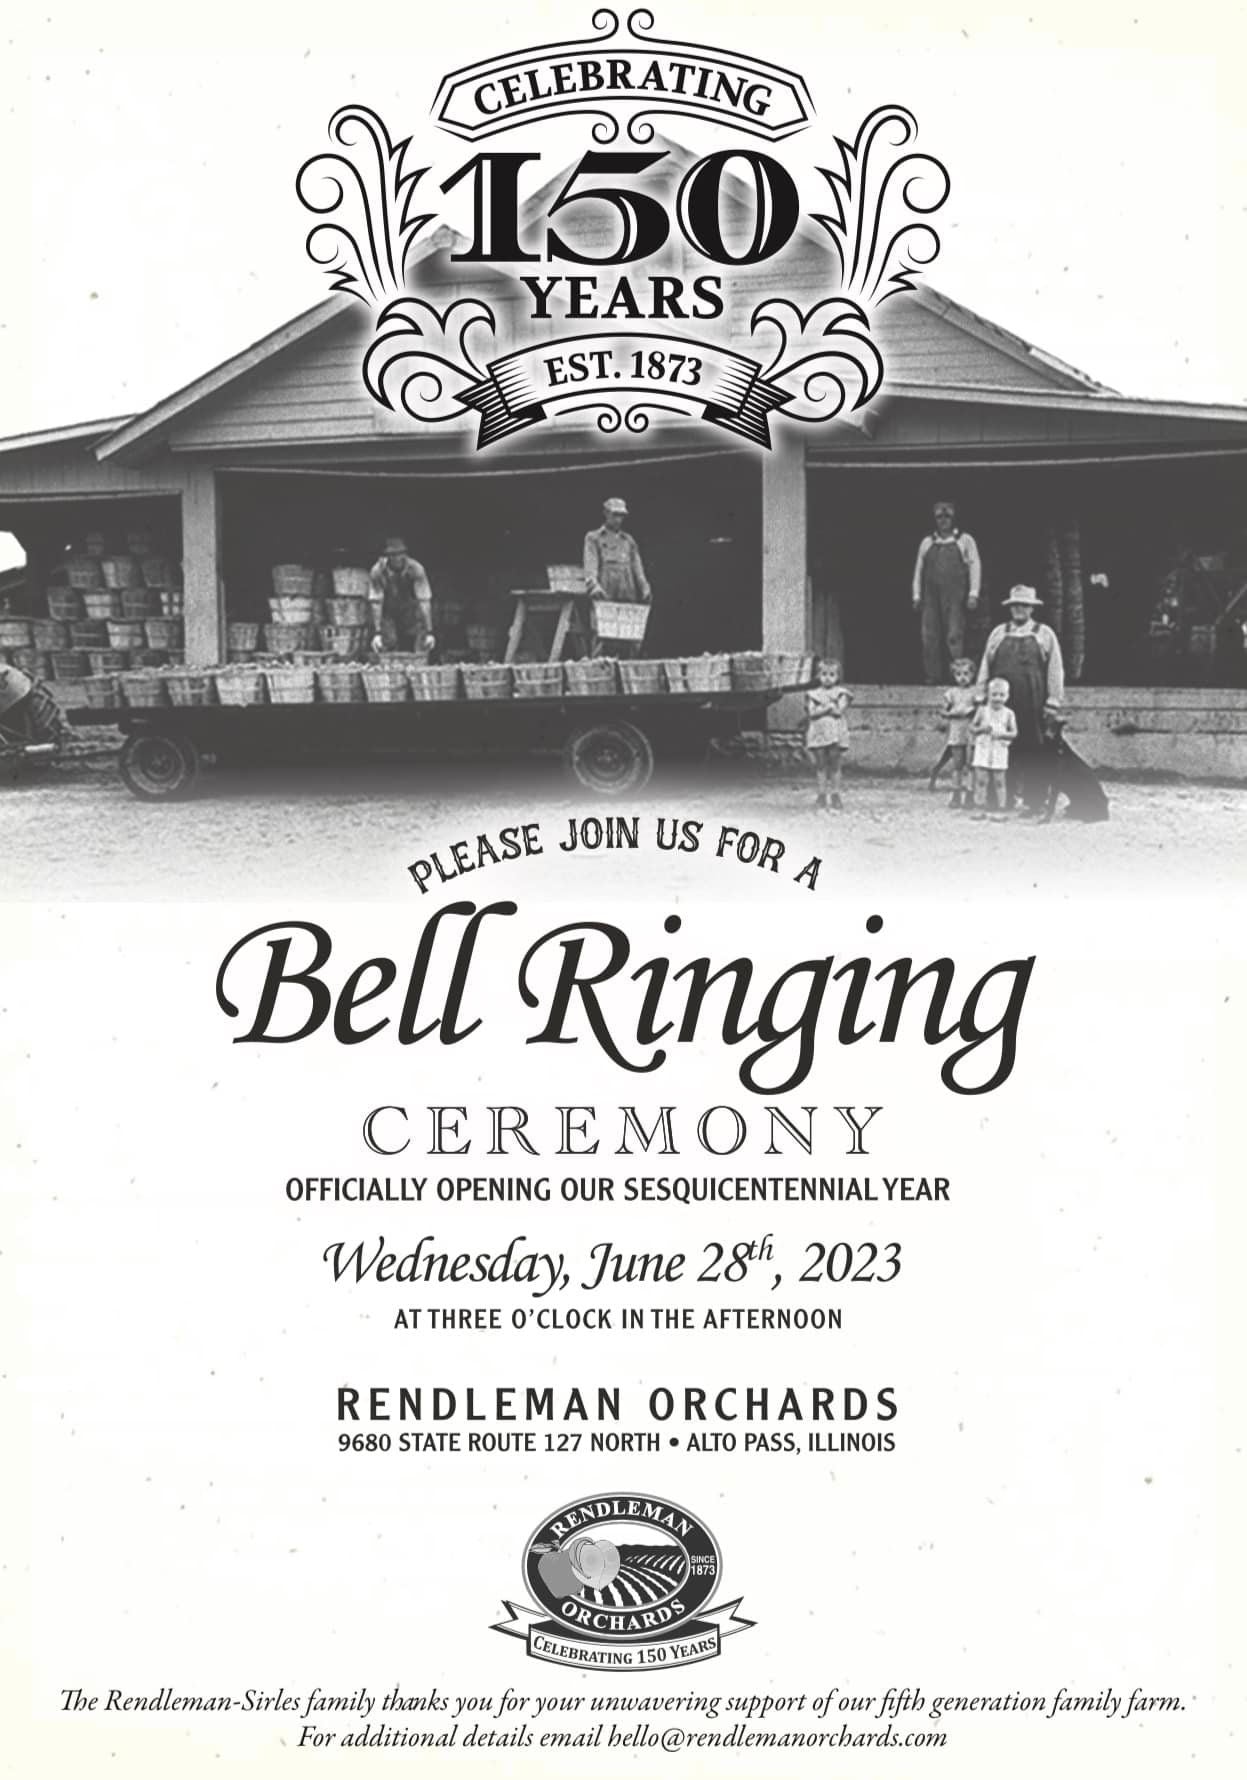 Image of Bell Ringing Ceremony invitation